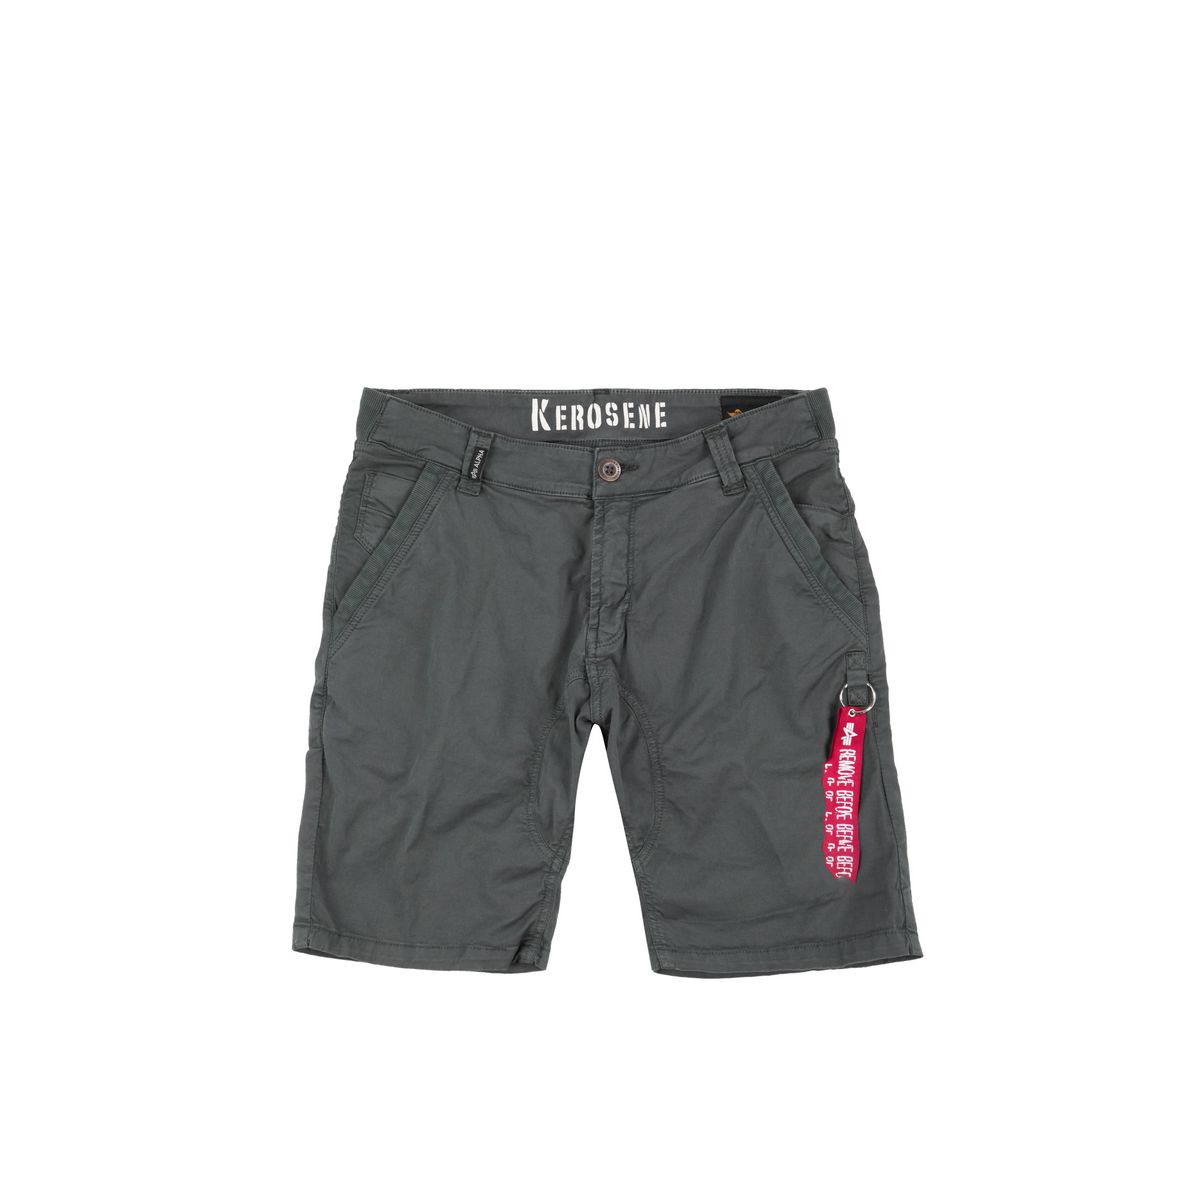 Short | Kerosene Greyblack Shorts | Shorts / Hose Men Industries | Lifestyle Alpha